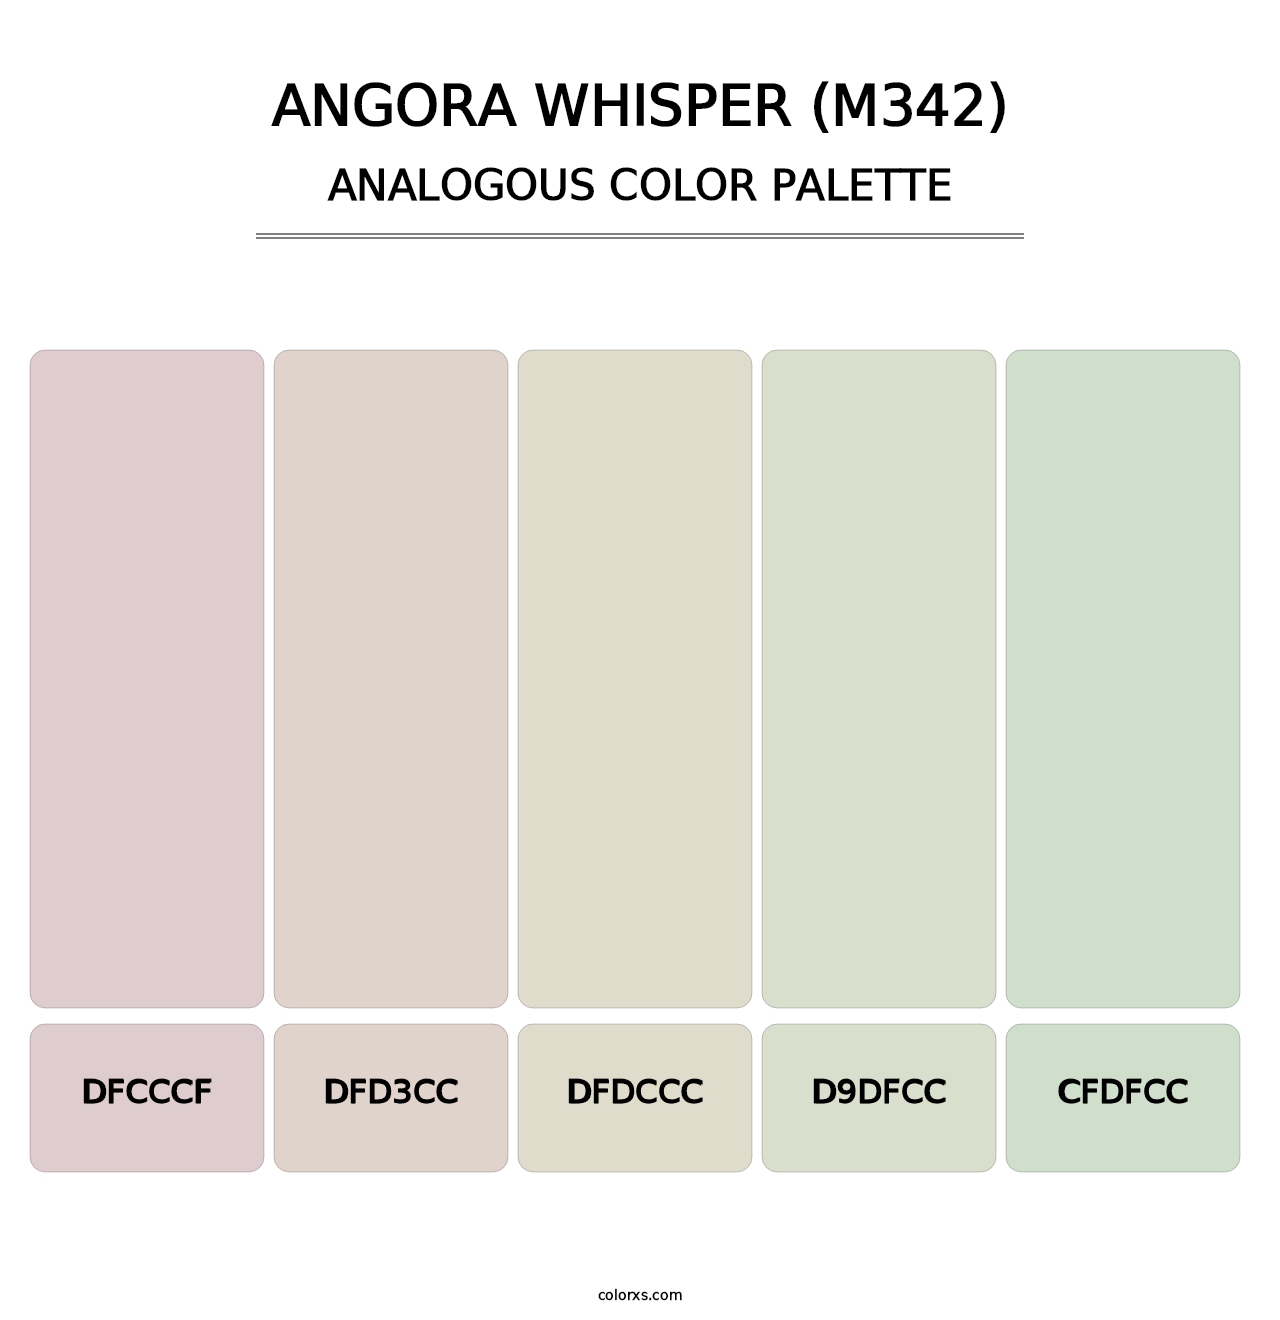 Angora Whisper (M342) - Analogous Color Palette